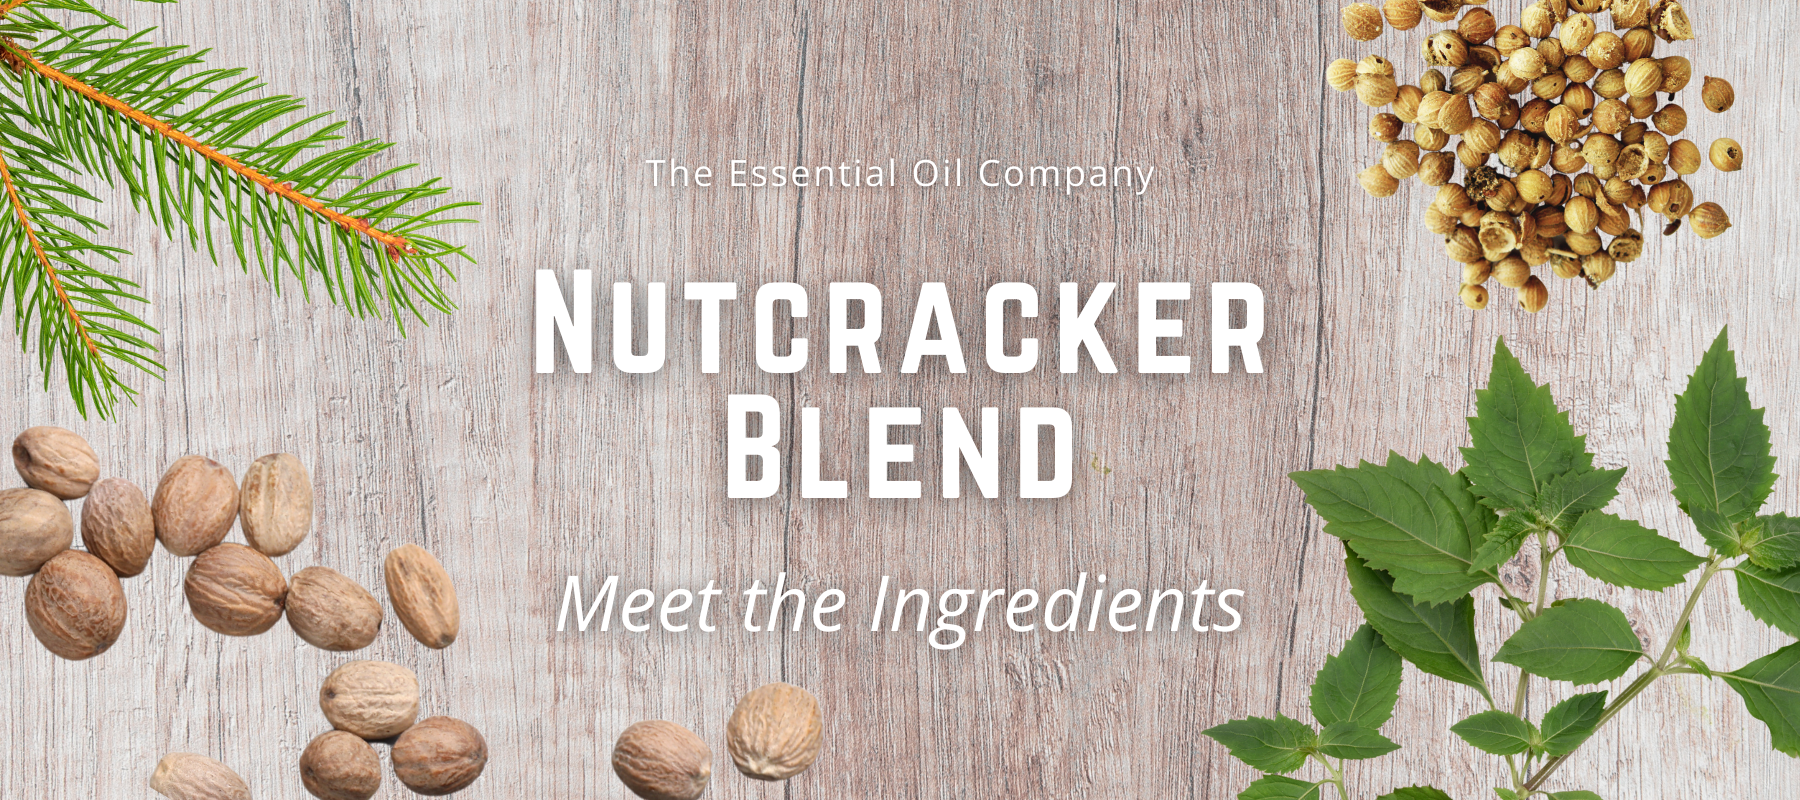 Nutcracker Blend: Meet the Ingredients